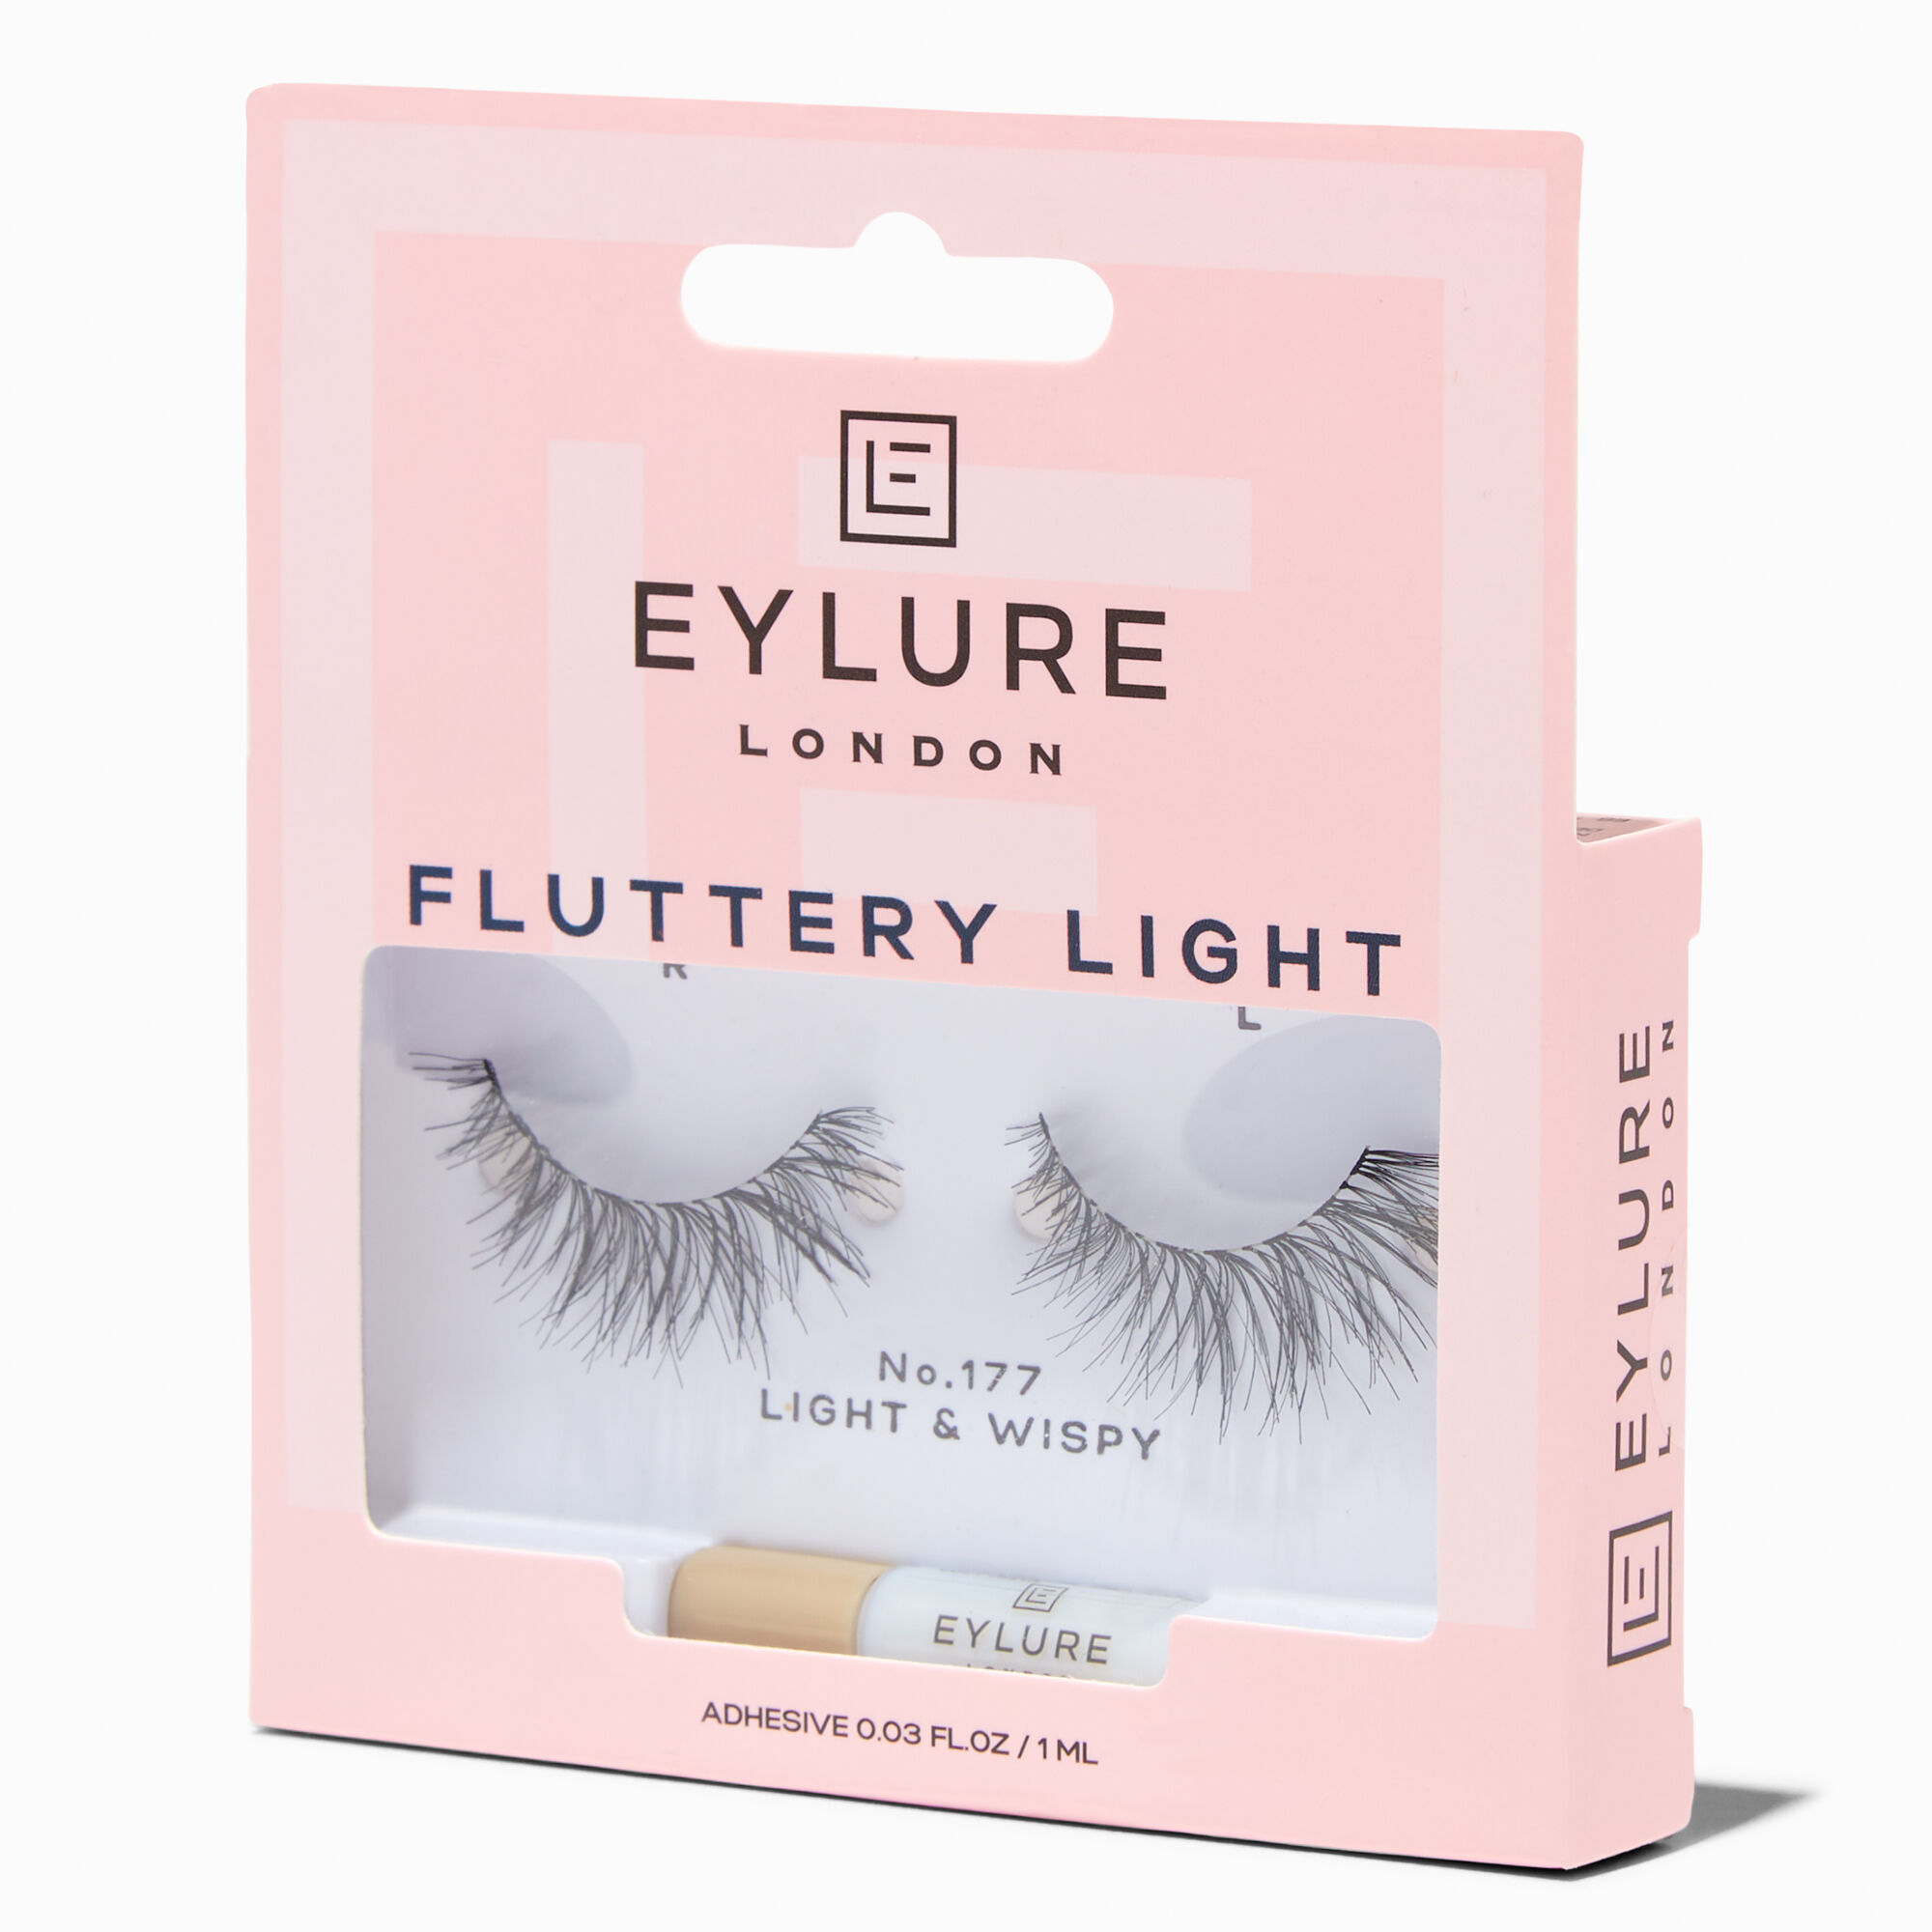 View Claires Eylure Fluttery Light False Lashes No 177 information